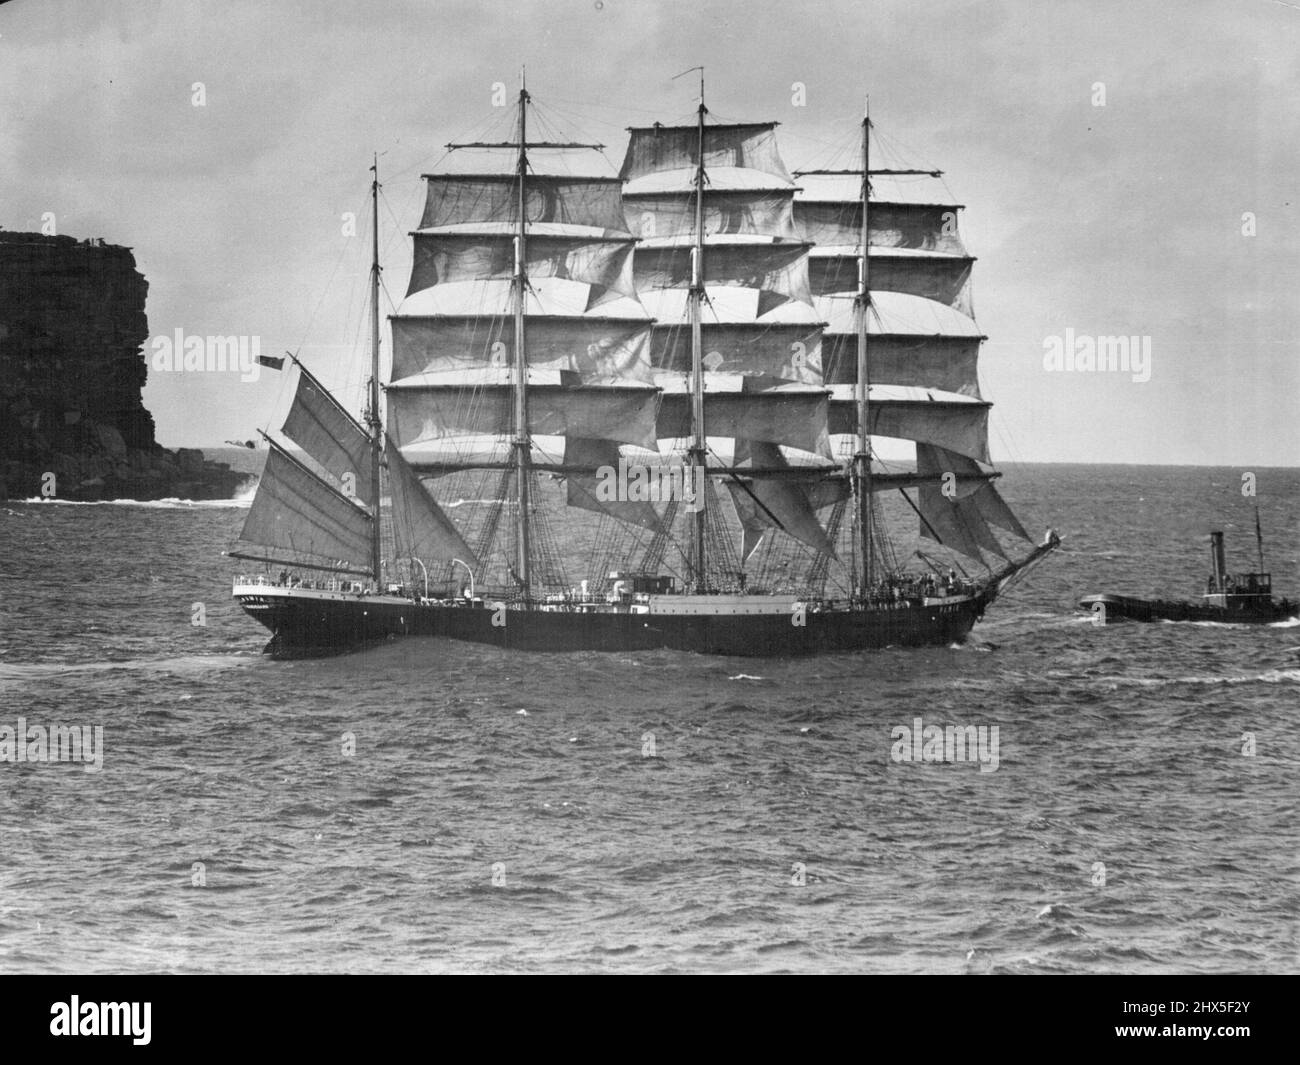 'Pamir' - German Naval Training Vessel Sunk 1957 - Merchant Shipping. April 14, 1947. Stock Photo